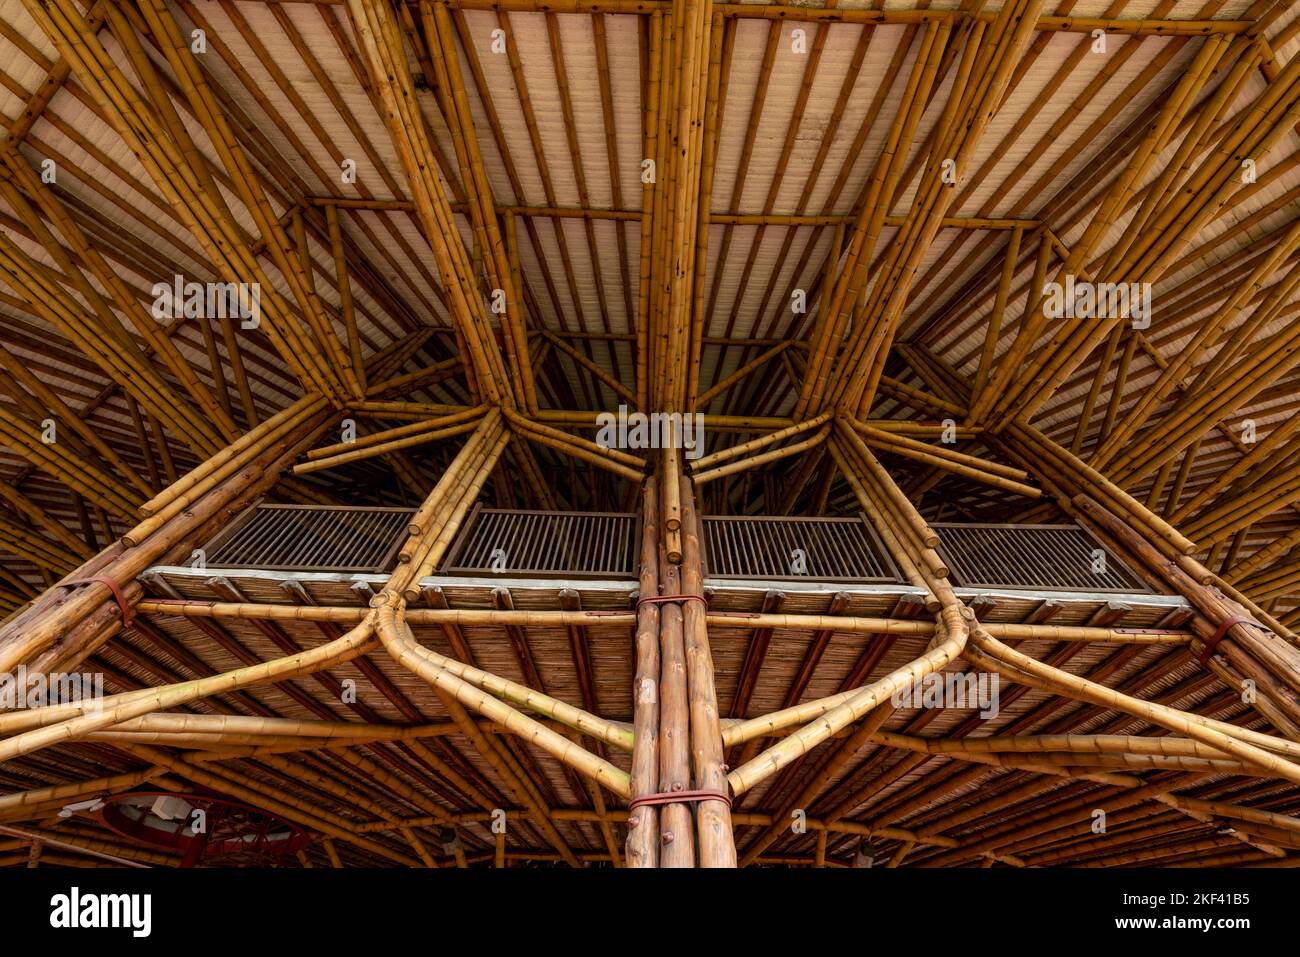 Construction Elements Truss of Bamboo Stock Photo - Image of folk,  construction: 72537174